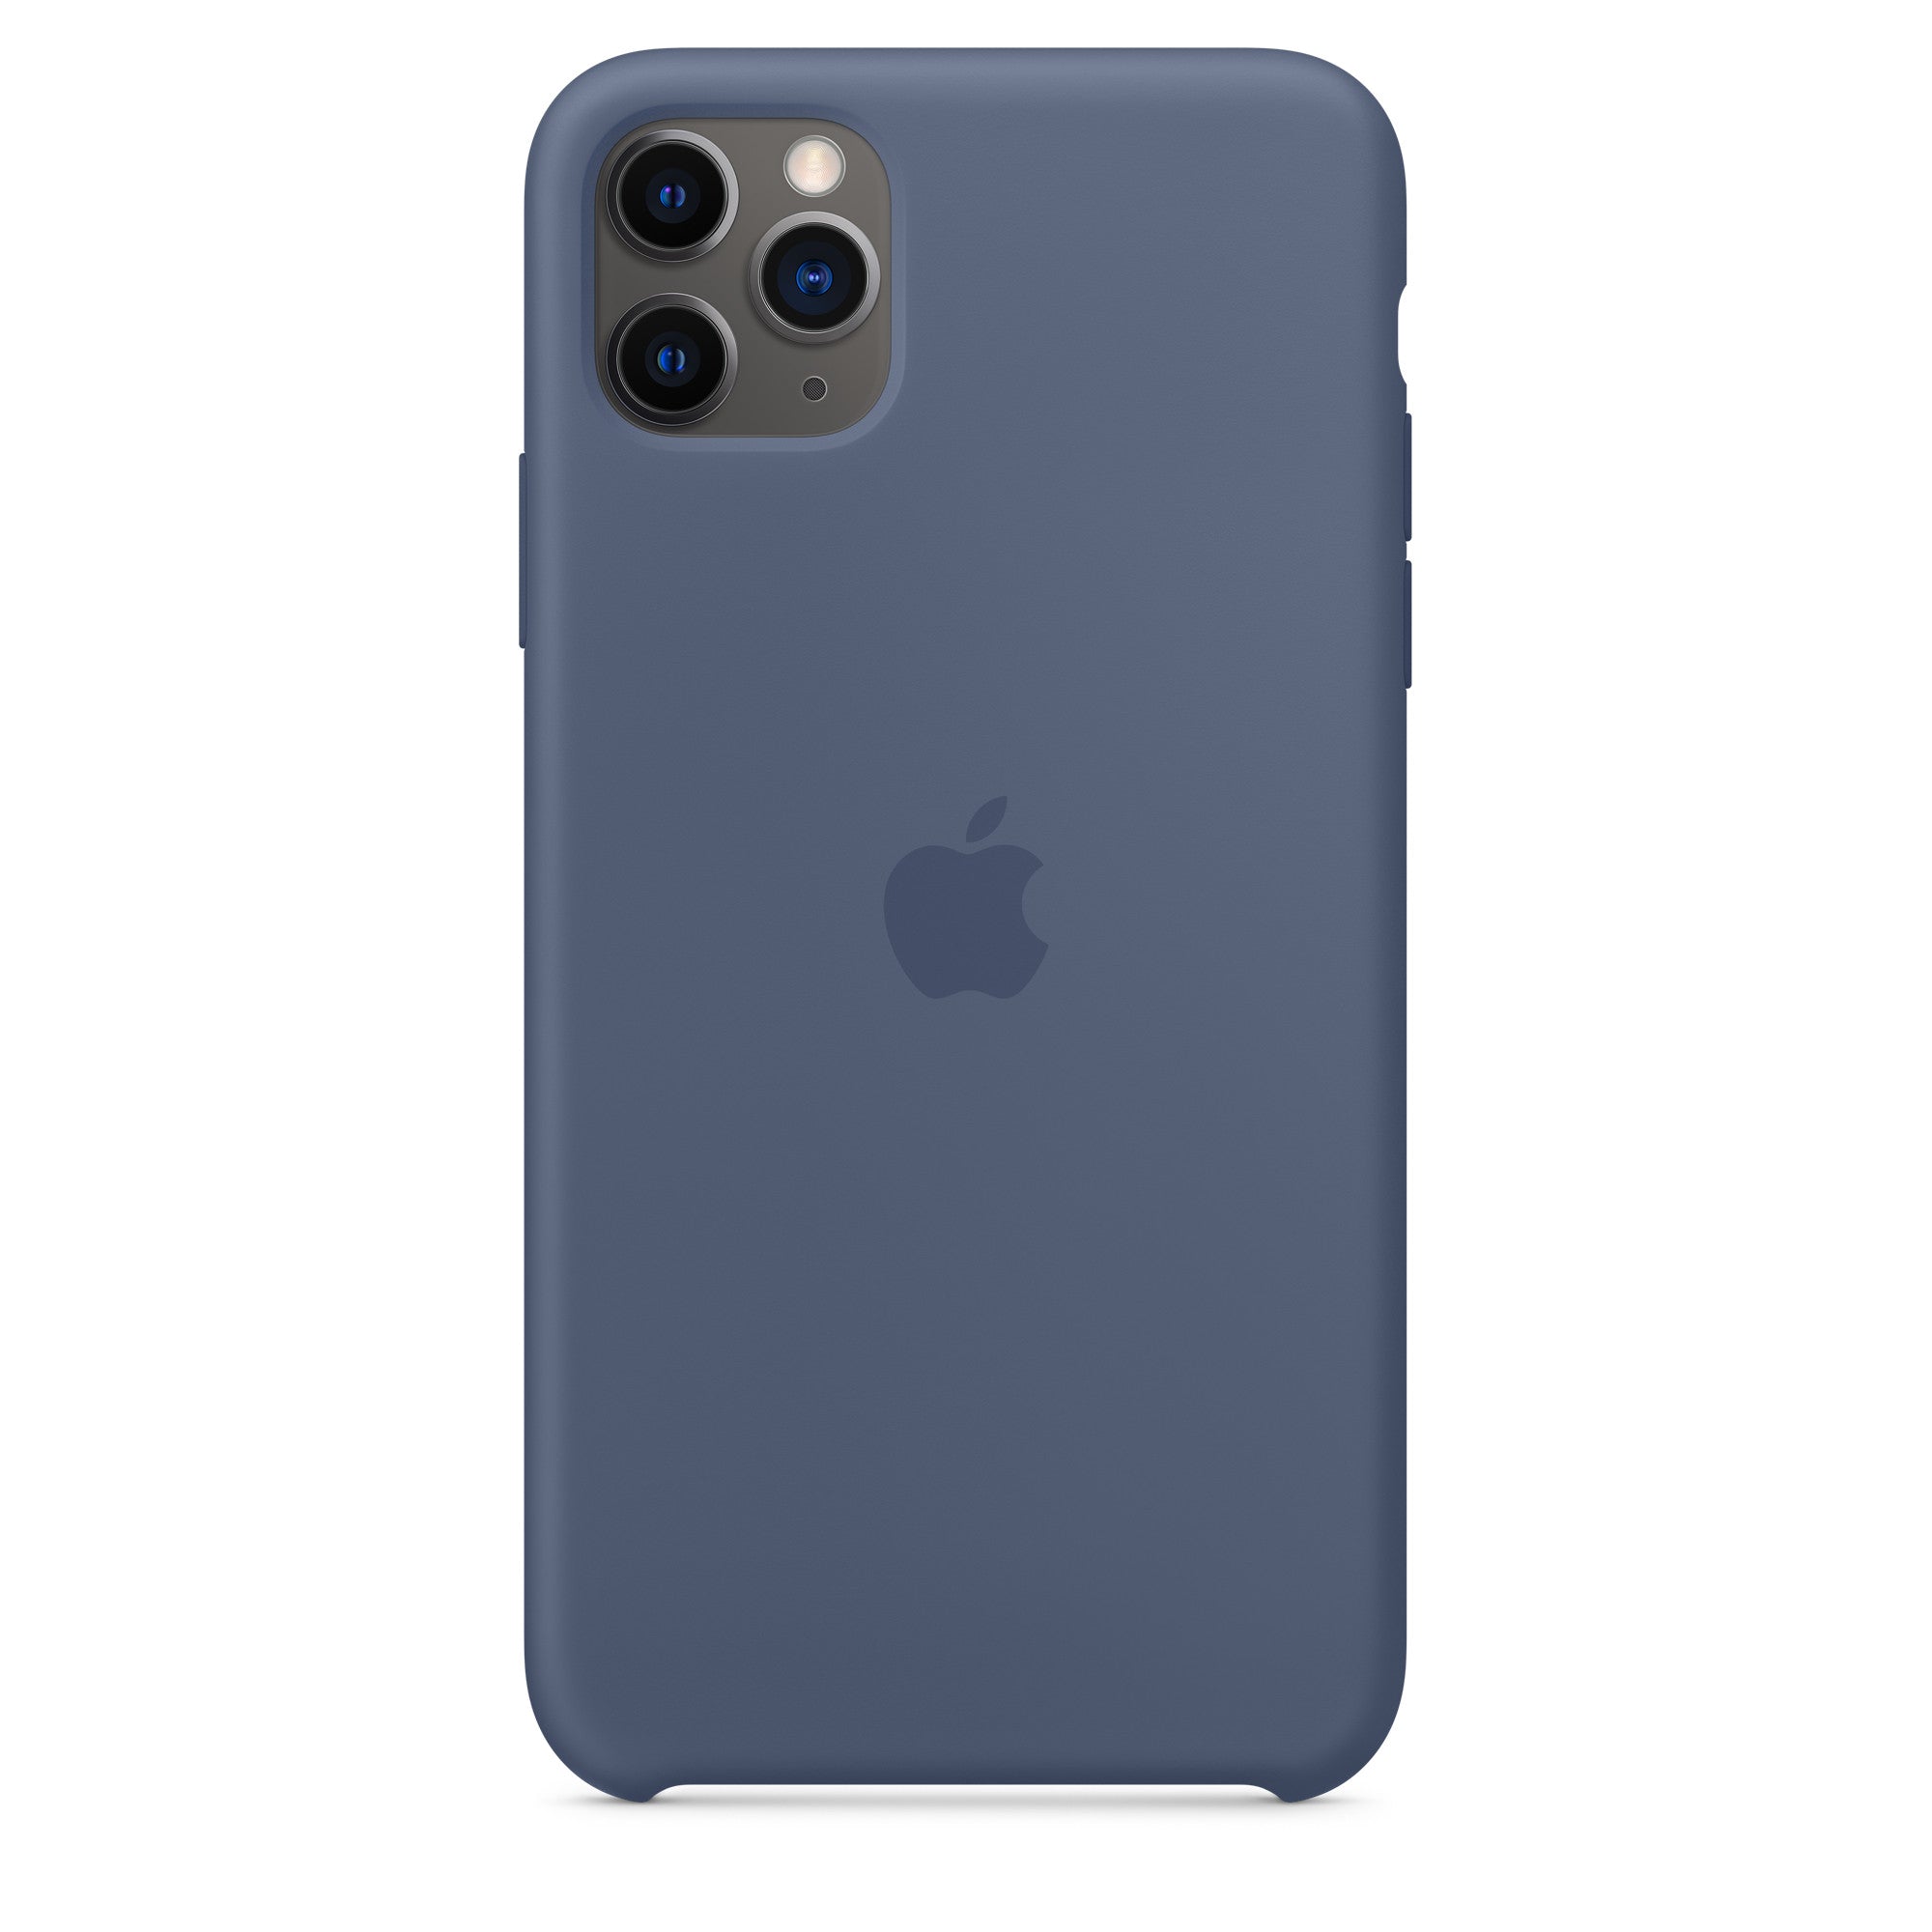 Apple iPhone 11 Pro Max Silicone Case Alaskan Blue Alaskan Blue New - Sealed